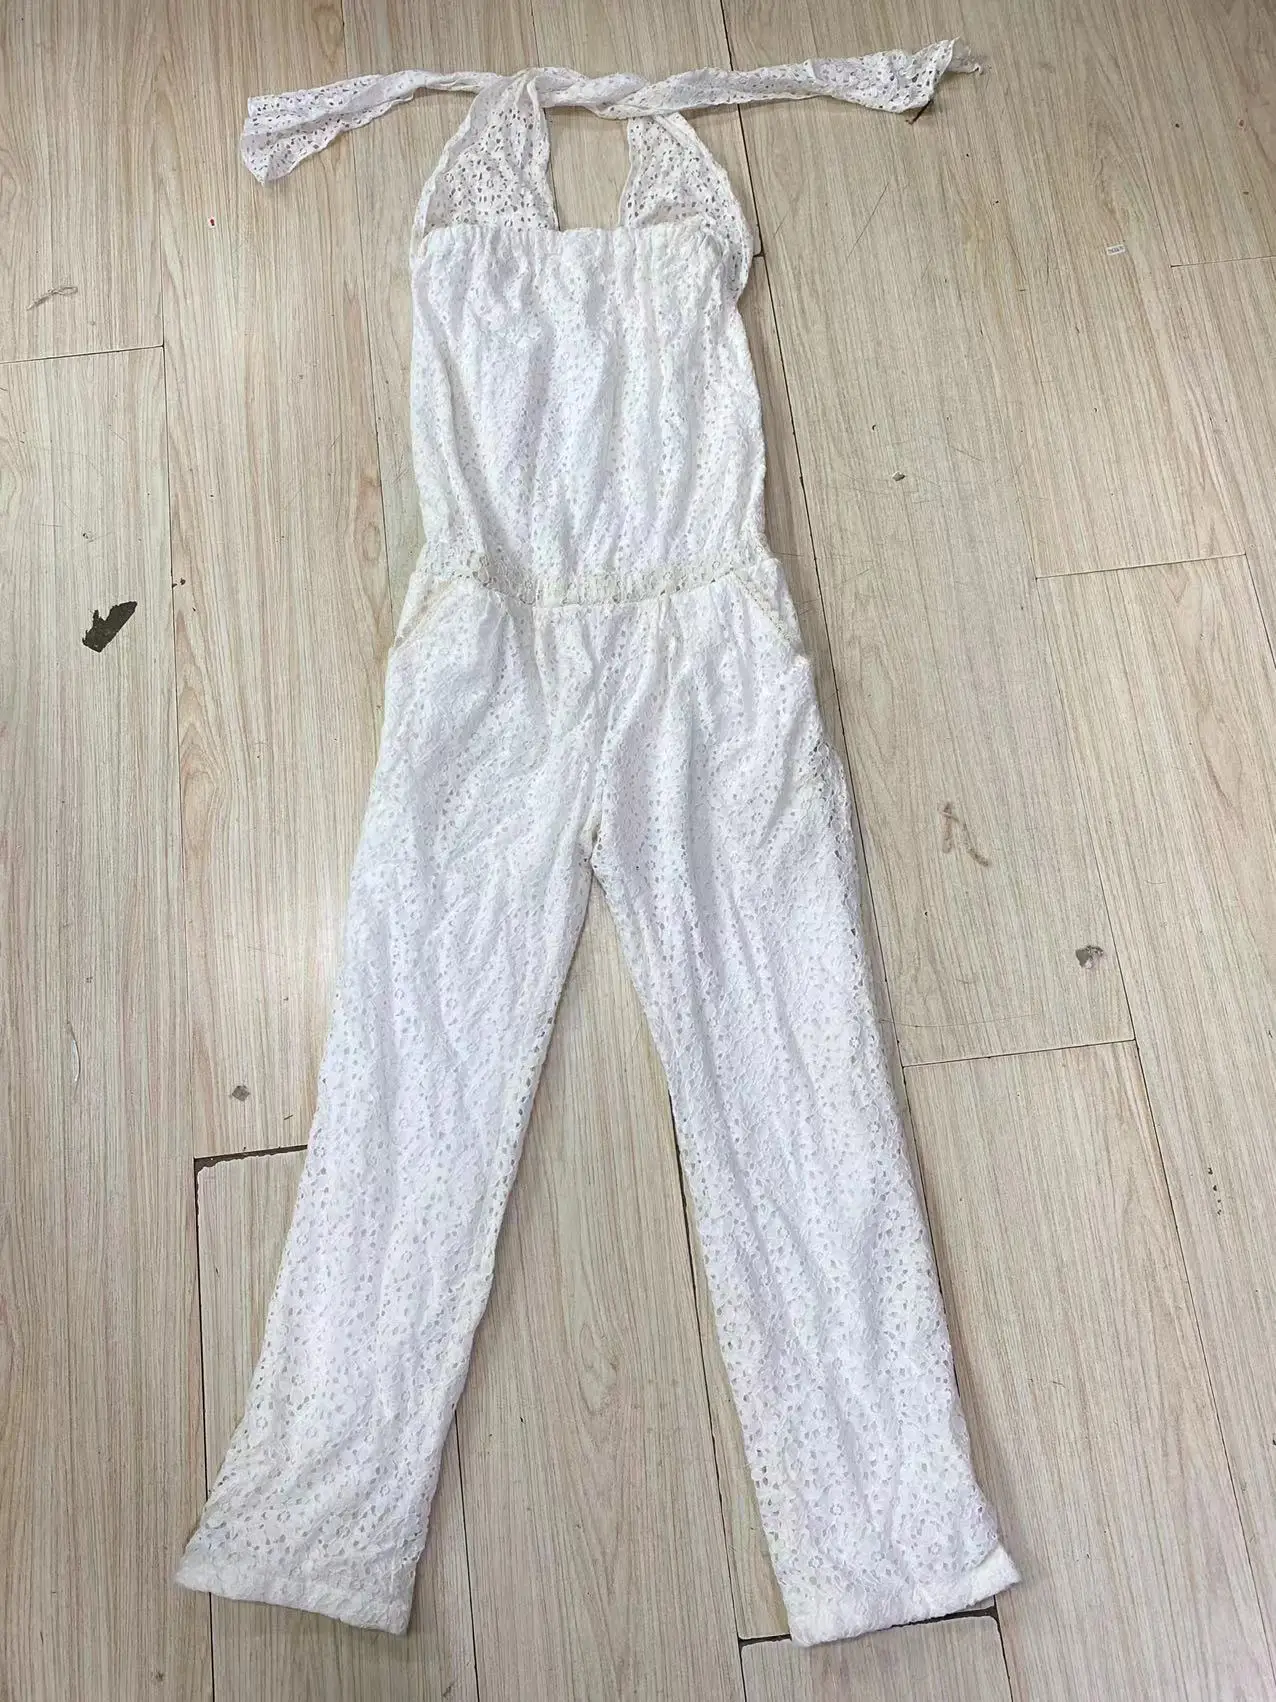 

Sales Japan Whole Lace Cotton Lining Fashion Strap Jumpsuit Overalls One piece Back Pockets Body Suit